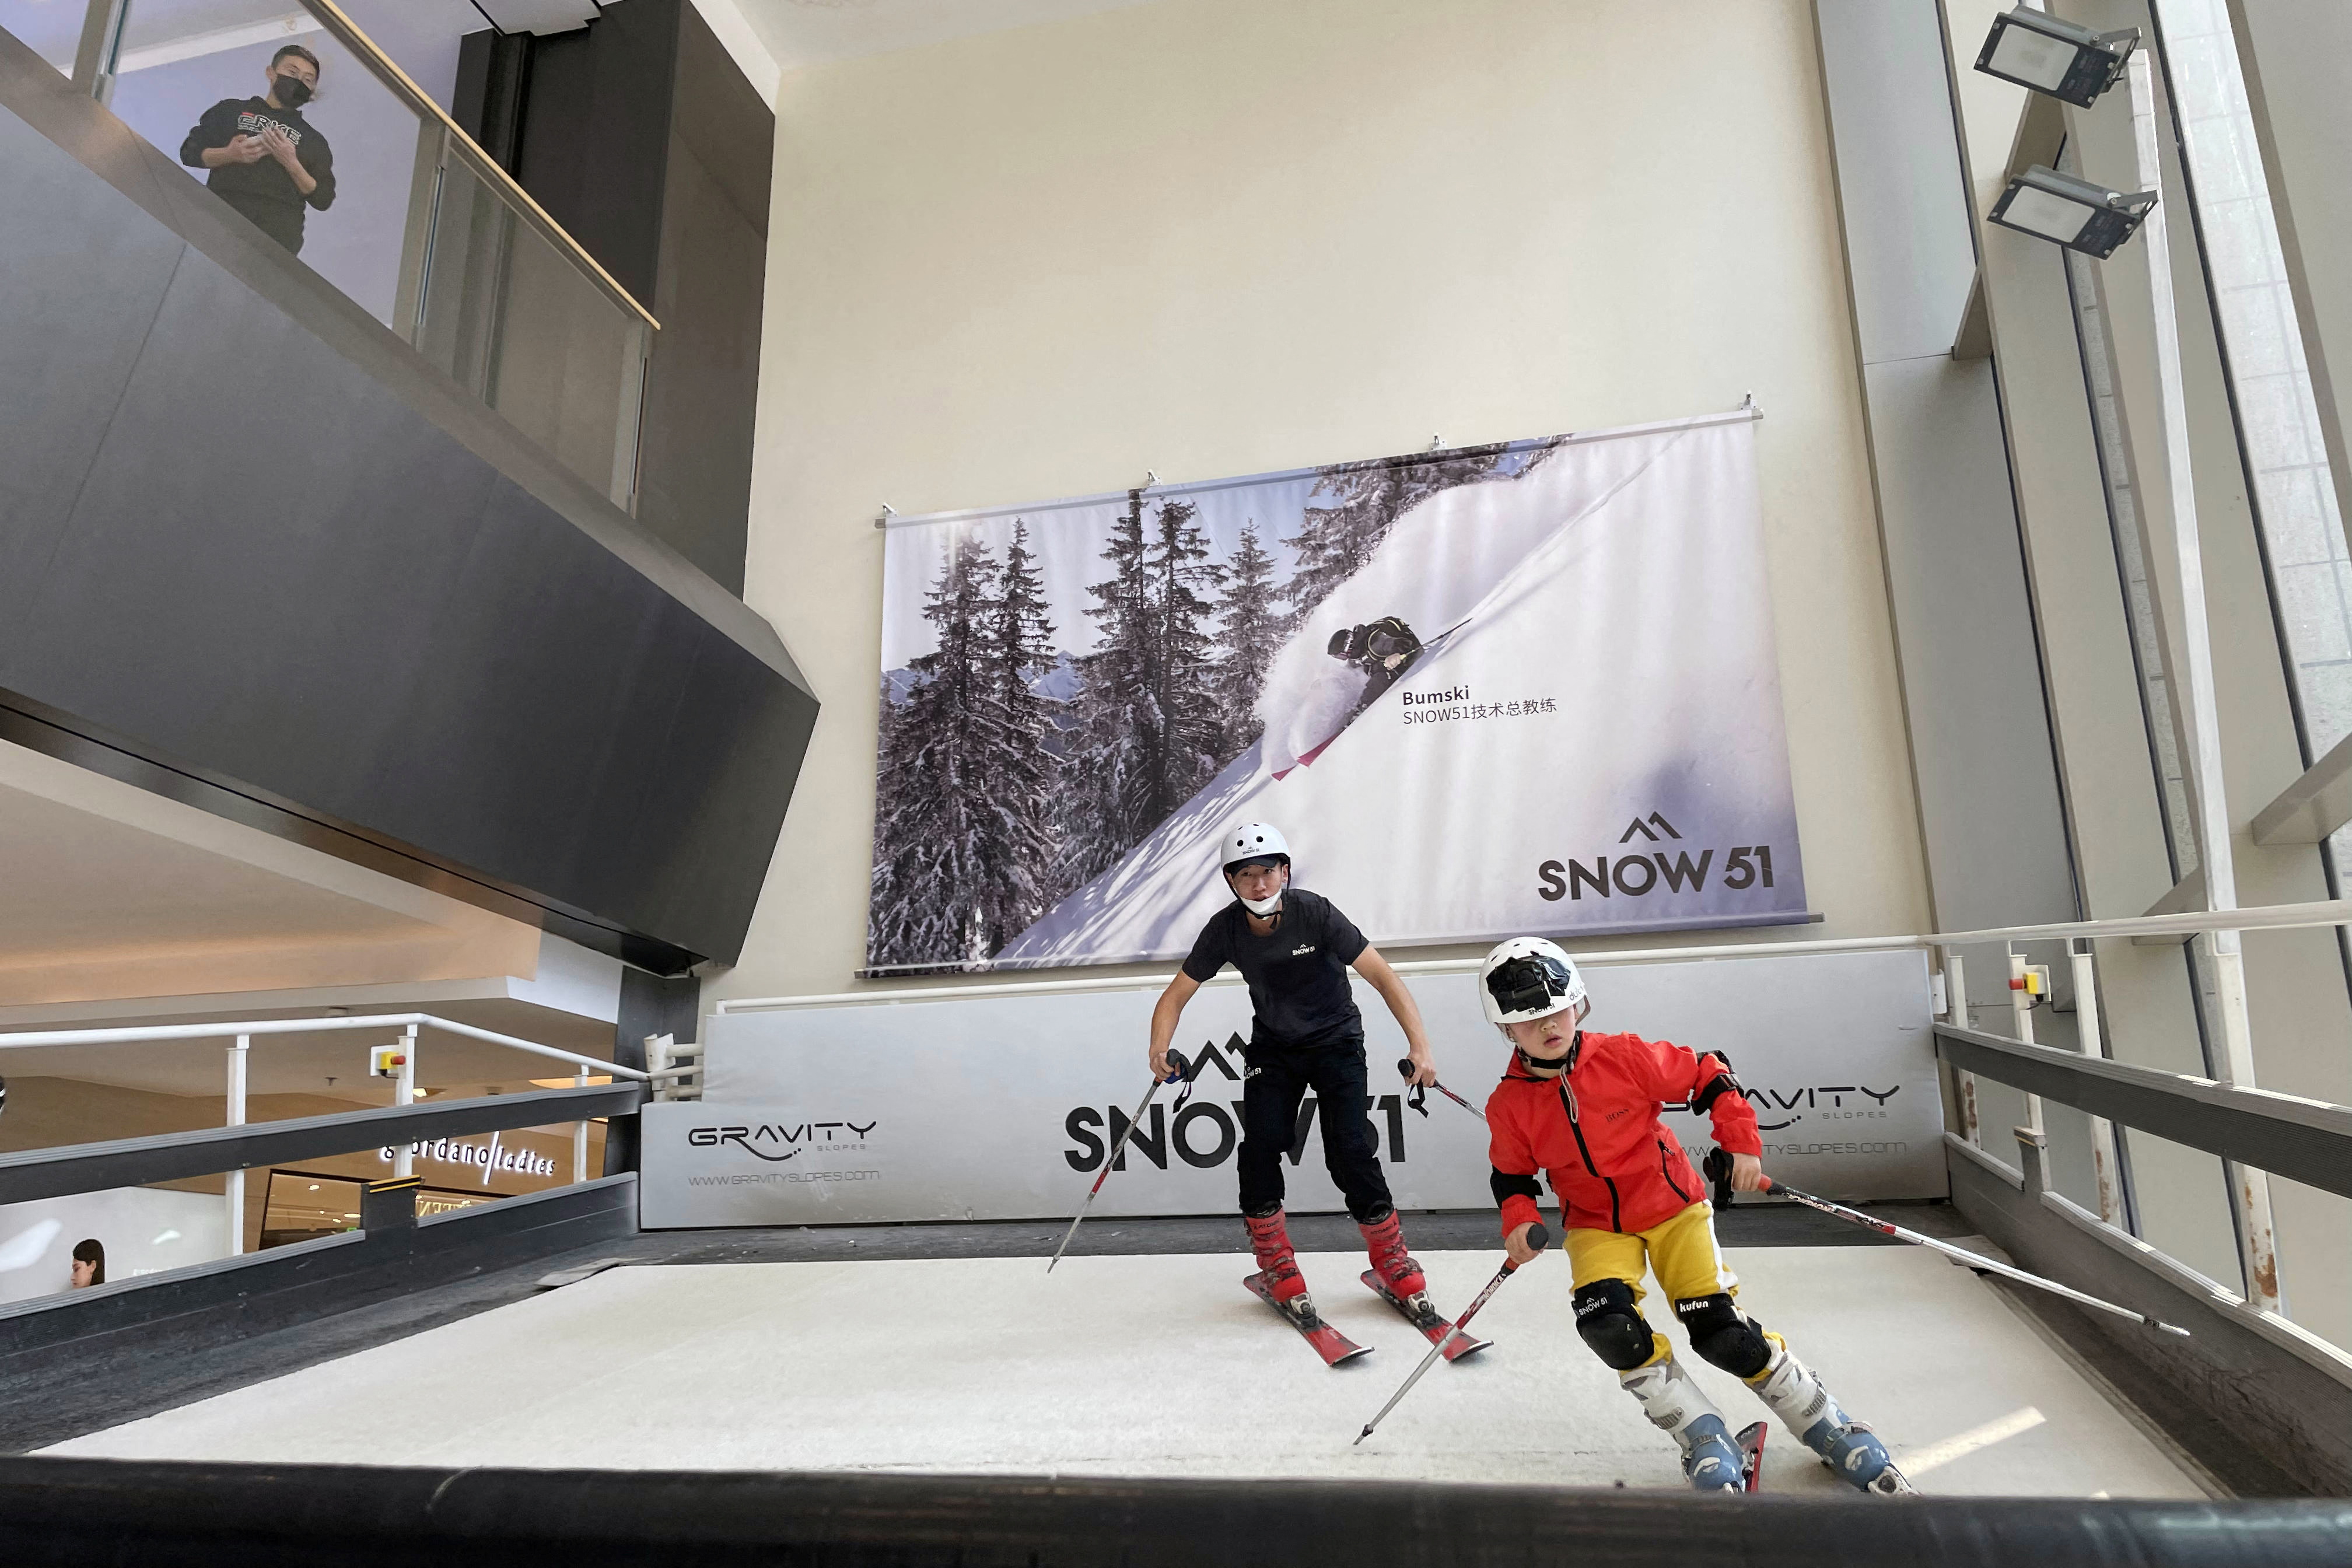 olympics-chinese-ski-simulator-chain-reaps-winter-sports-buzz-reuters